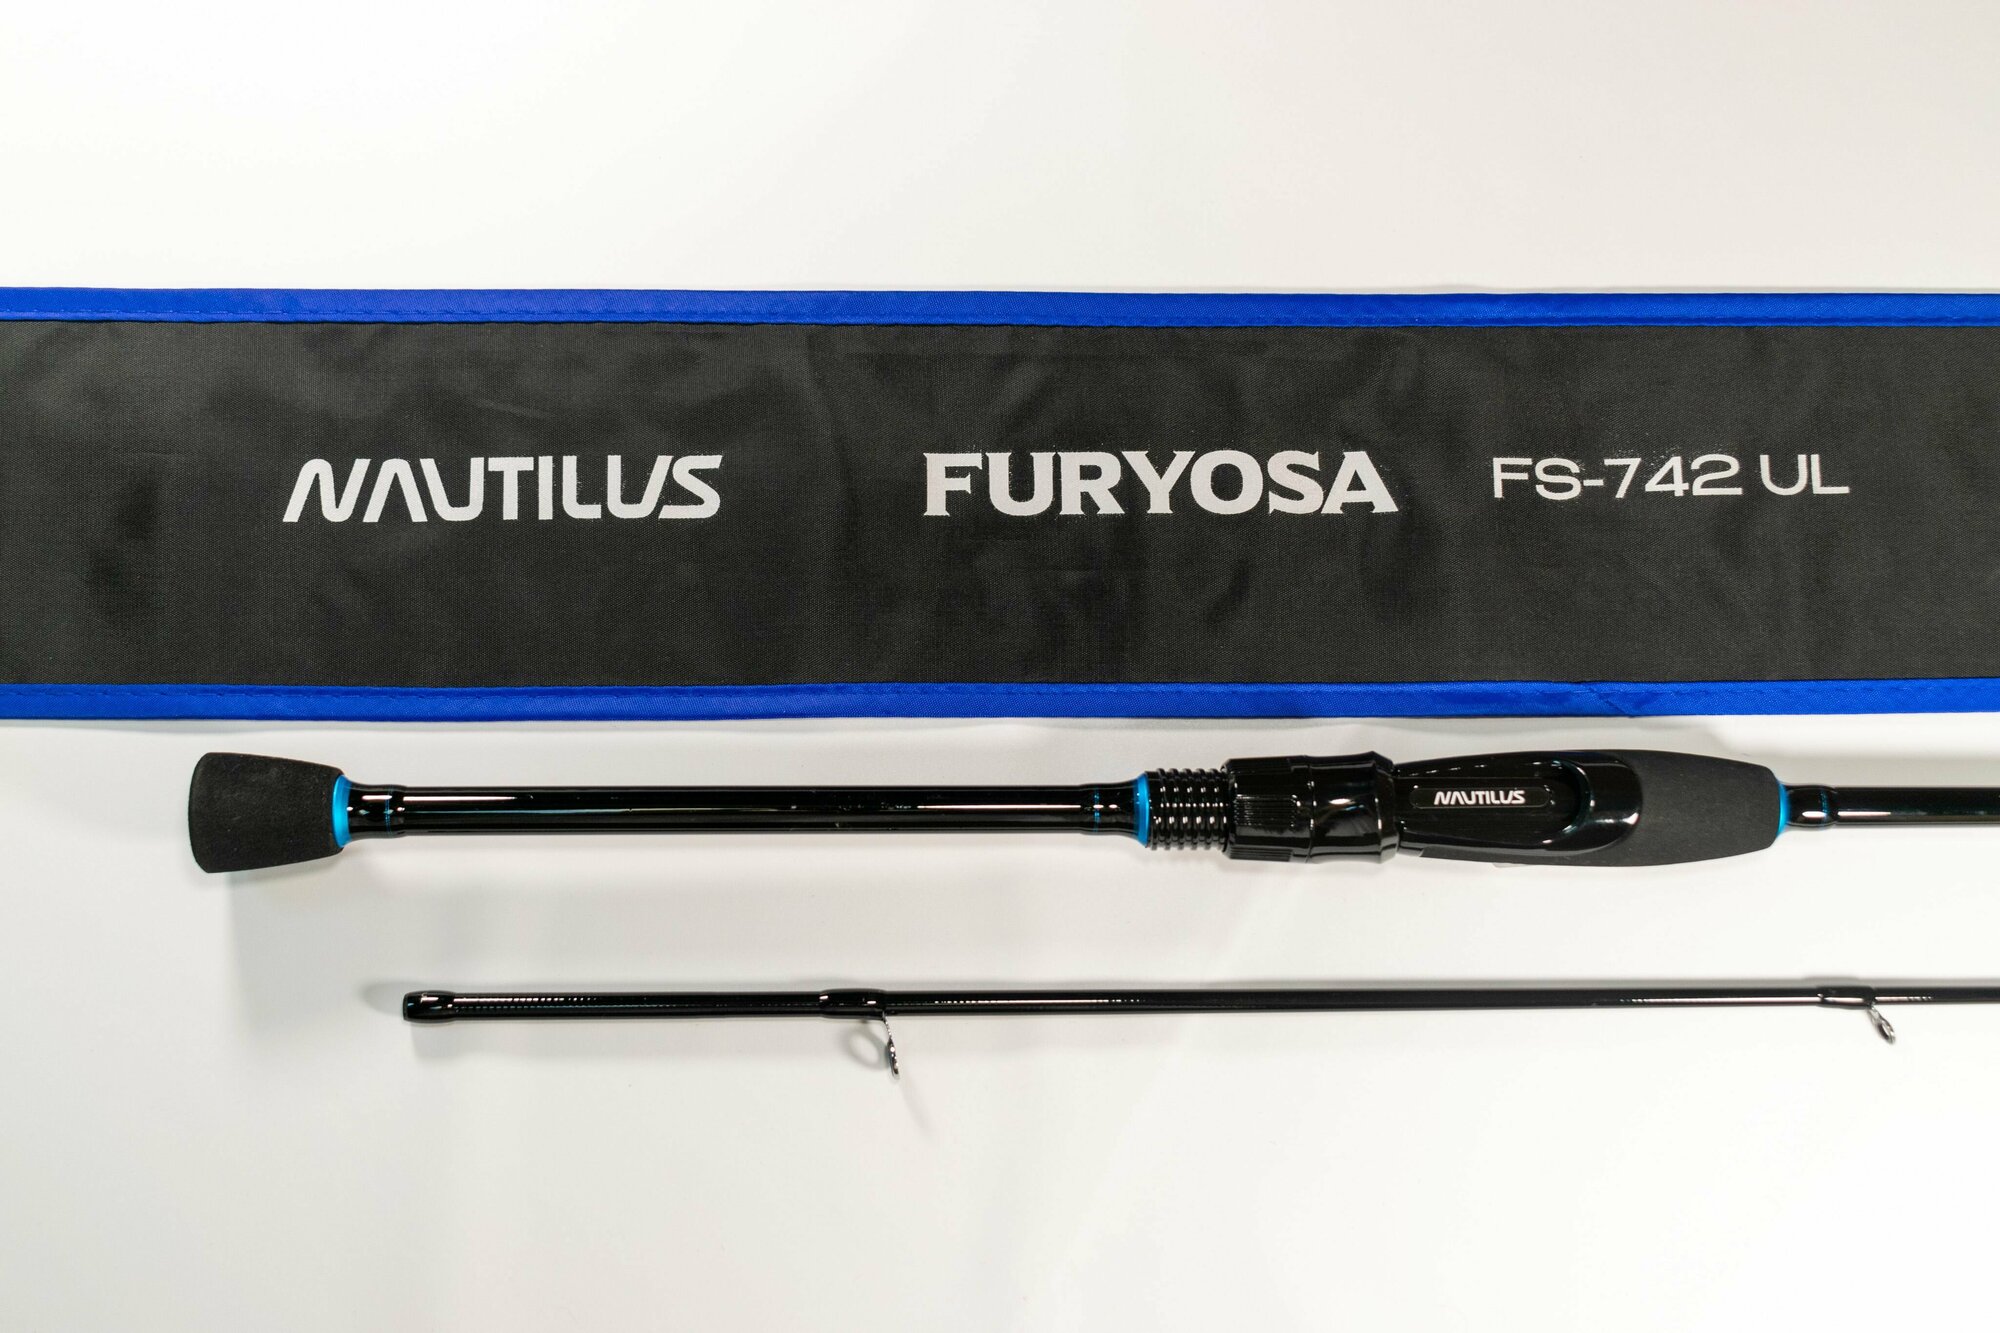 Спиннинг Nautilus Furyosa FRYS-742UL 223см 0.5-8гр